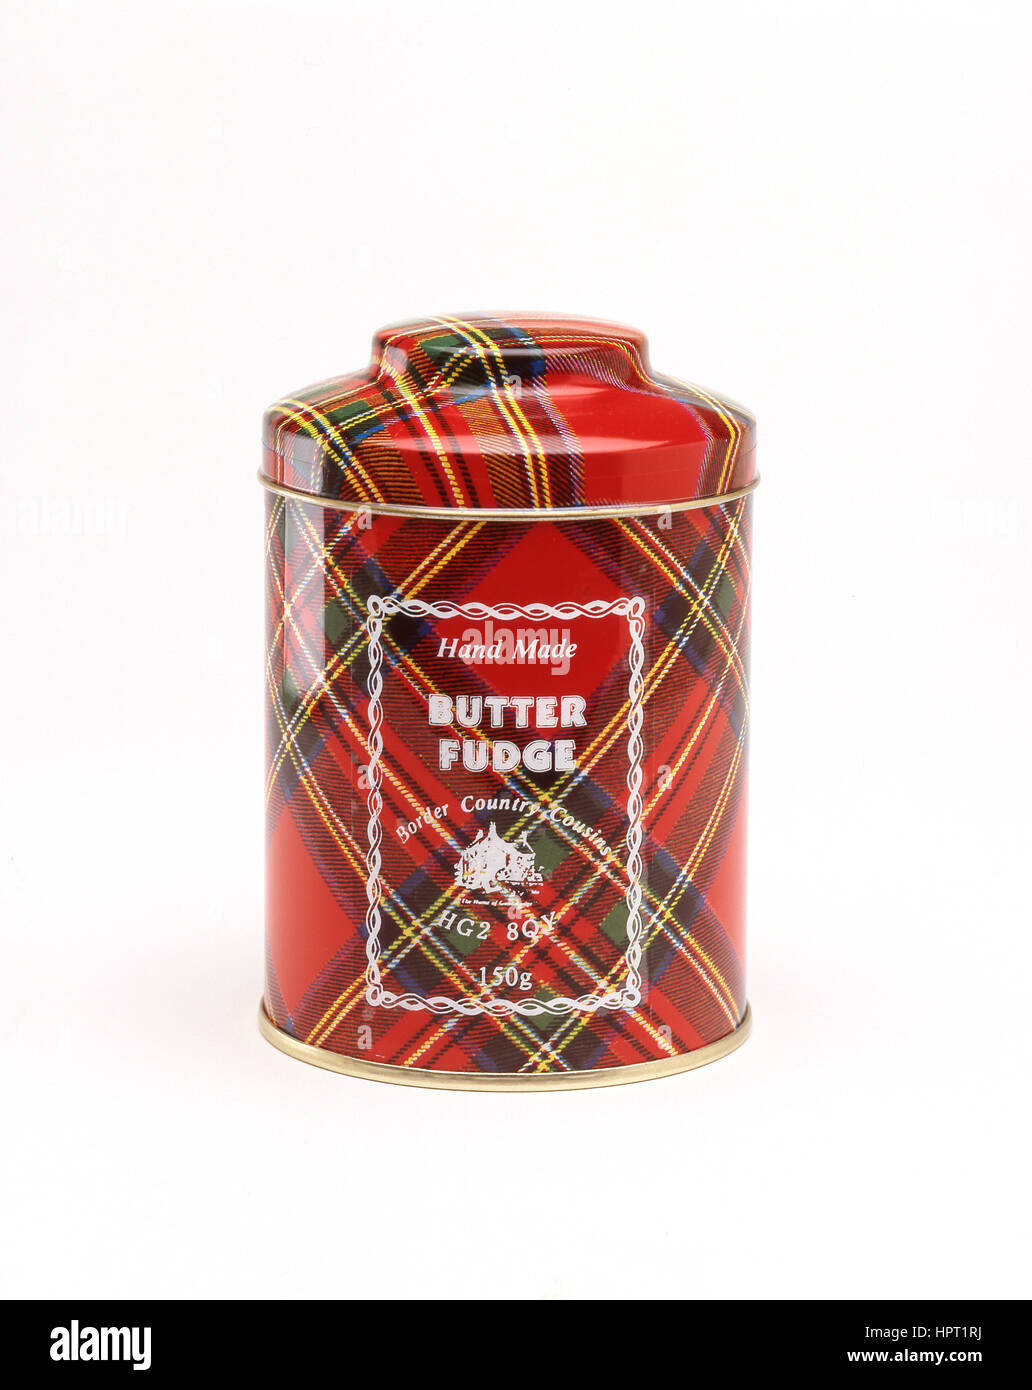 Hecho a mano la mantequilla escocesa fudge, Inverness, Scottish Highlands, Scotland, Reino Unido Foto de stock